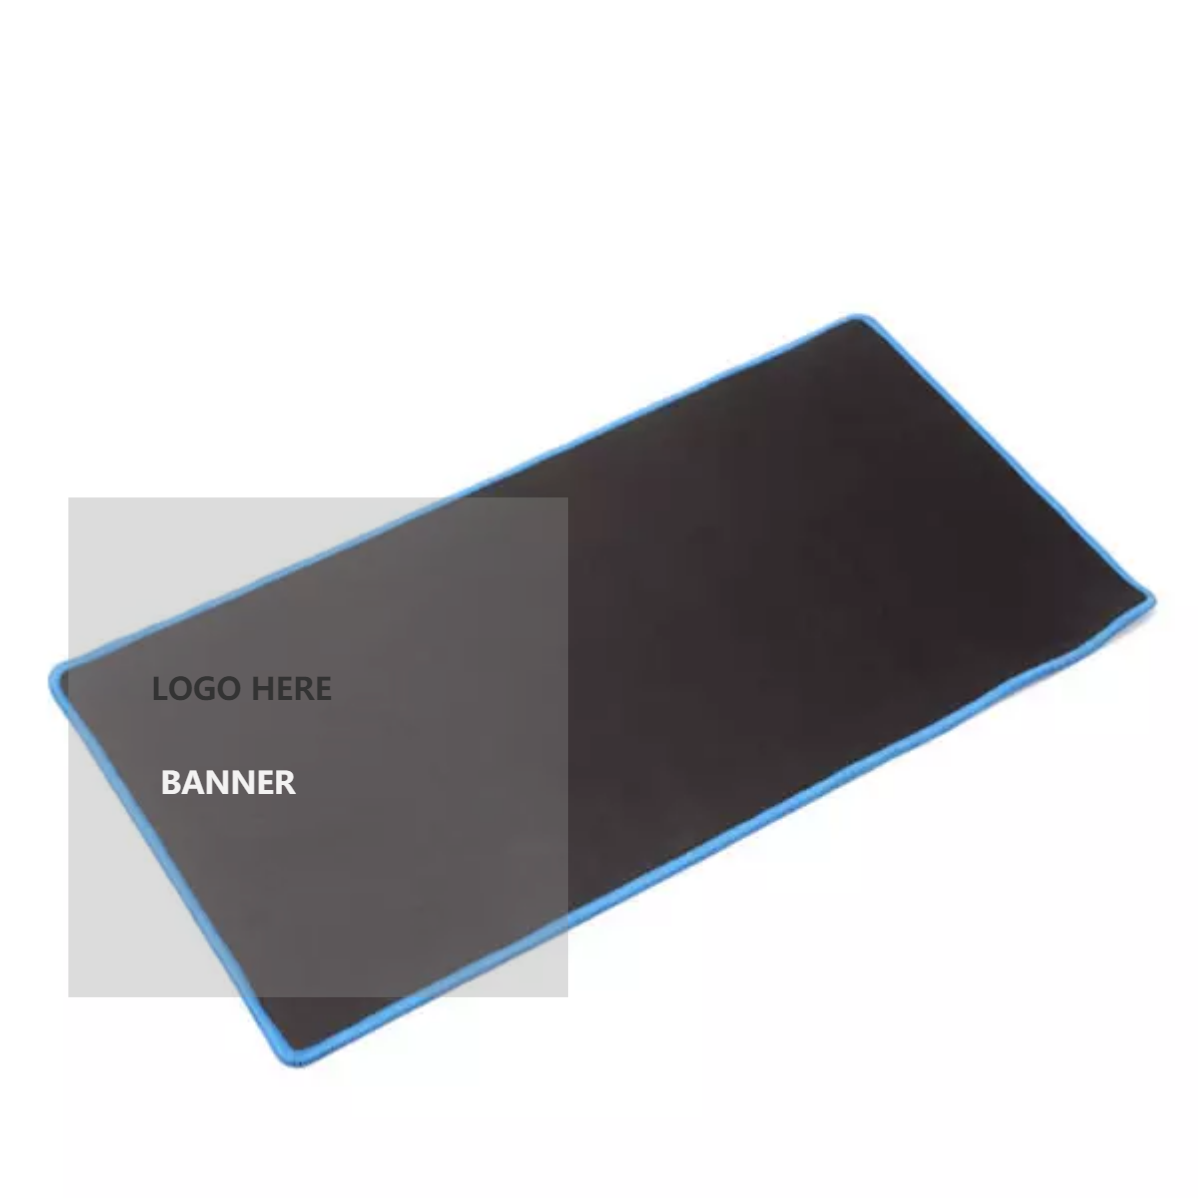 Prime quality RGB led custom mouse pad